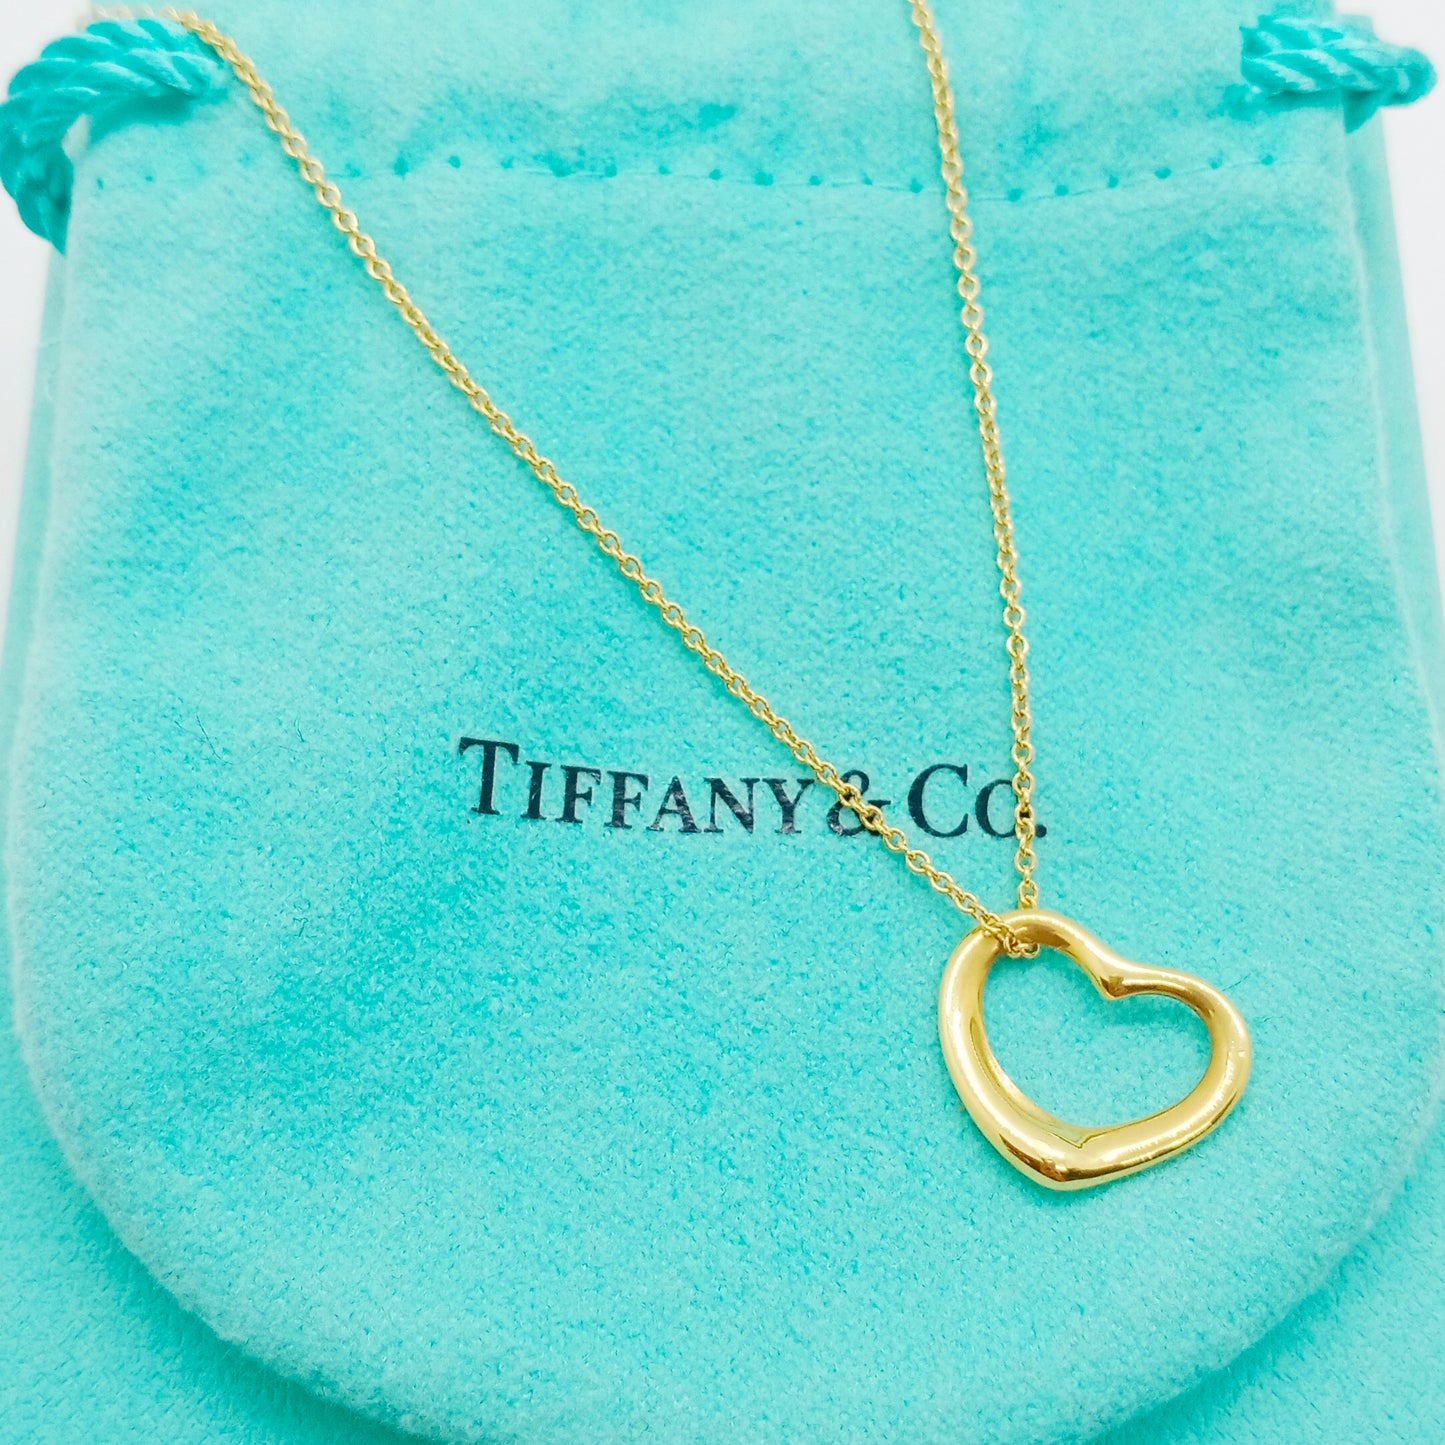 Tiffany & Co. Open Heart Necklace Small